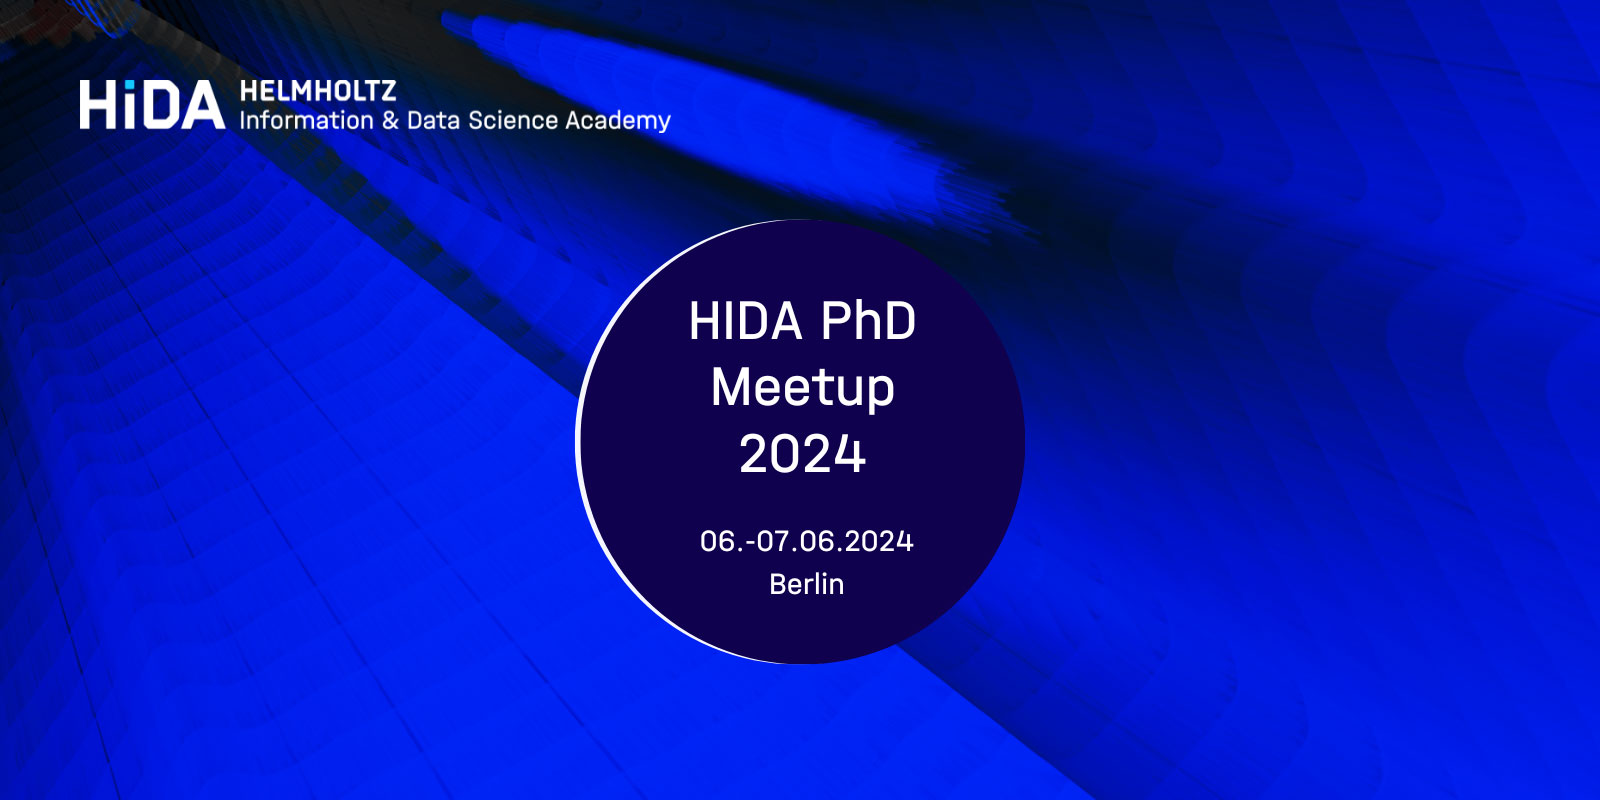 Image to promote HIDA PhD Meetup on 6-7 June 2024 in Berlin